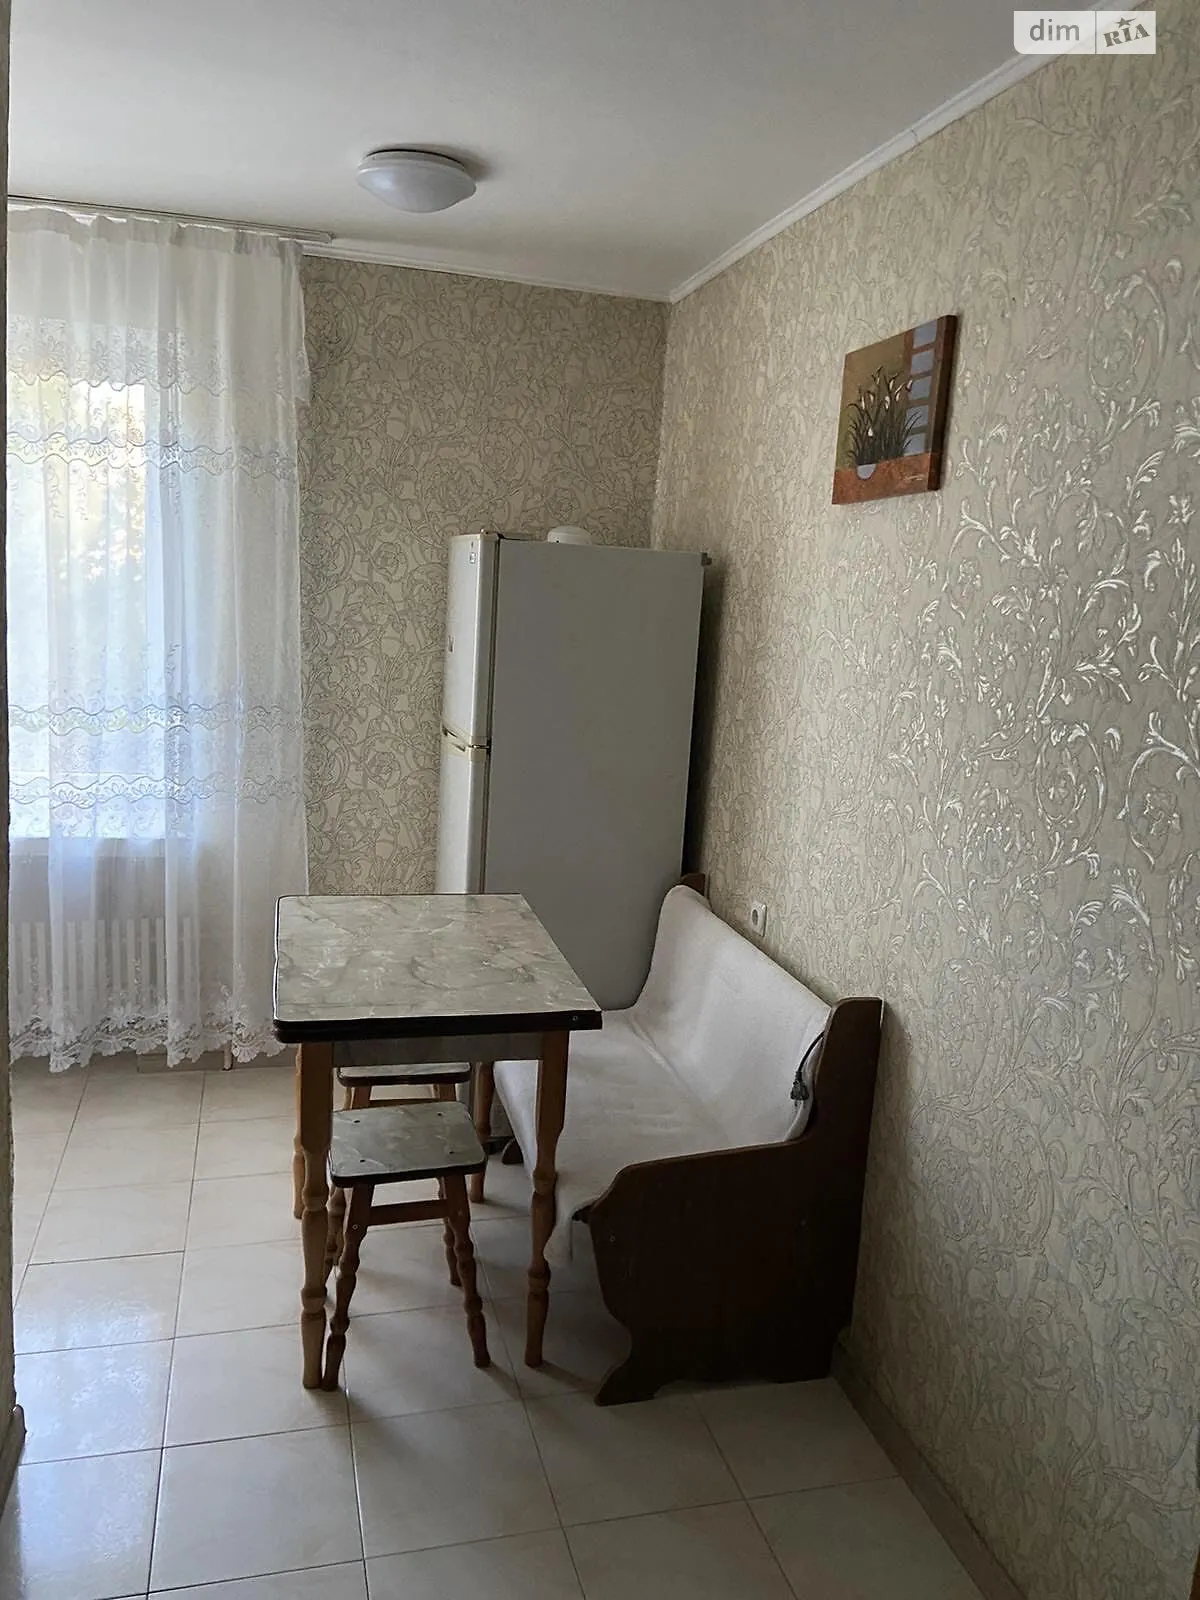 1-кімнатна квартира у Тернополі, цена: 600 грн - фото 1